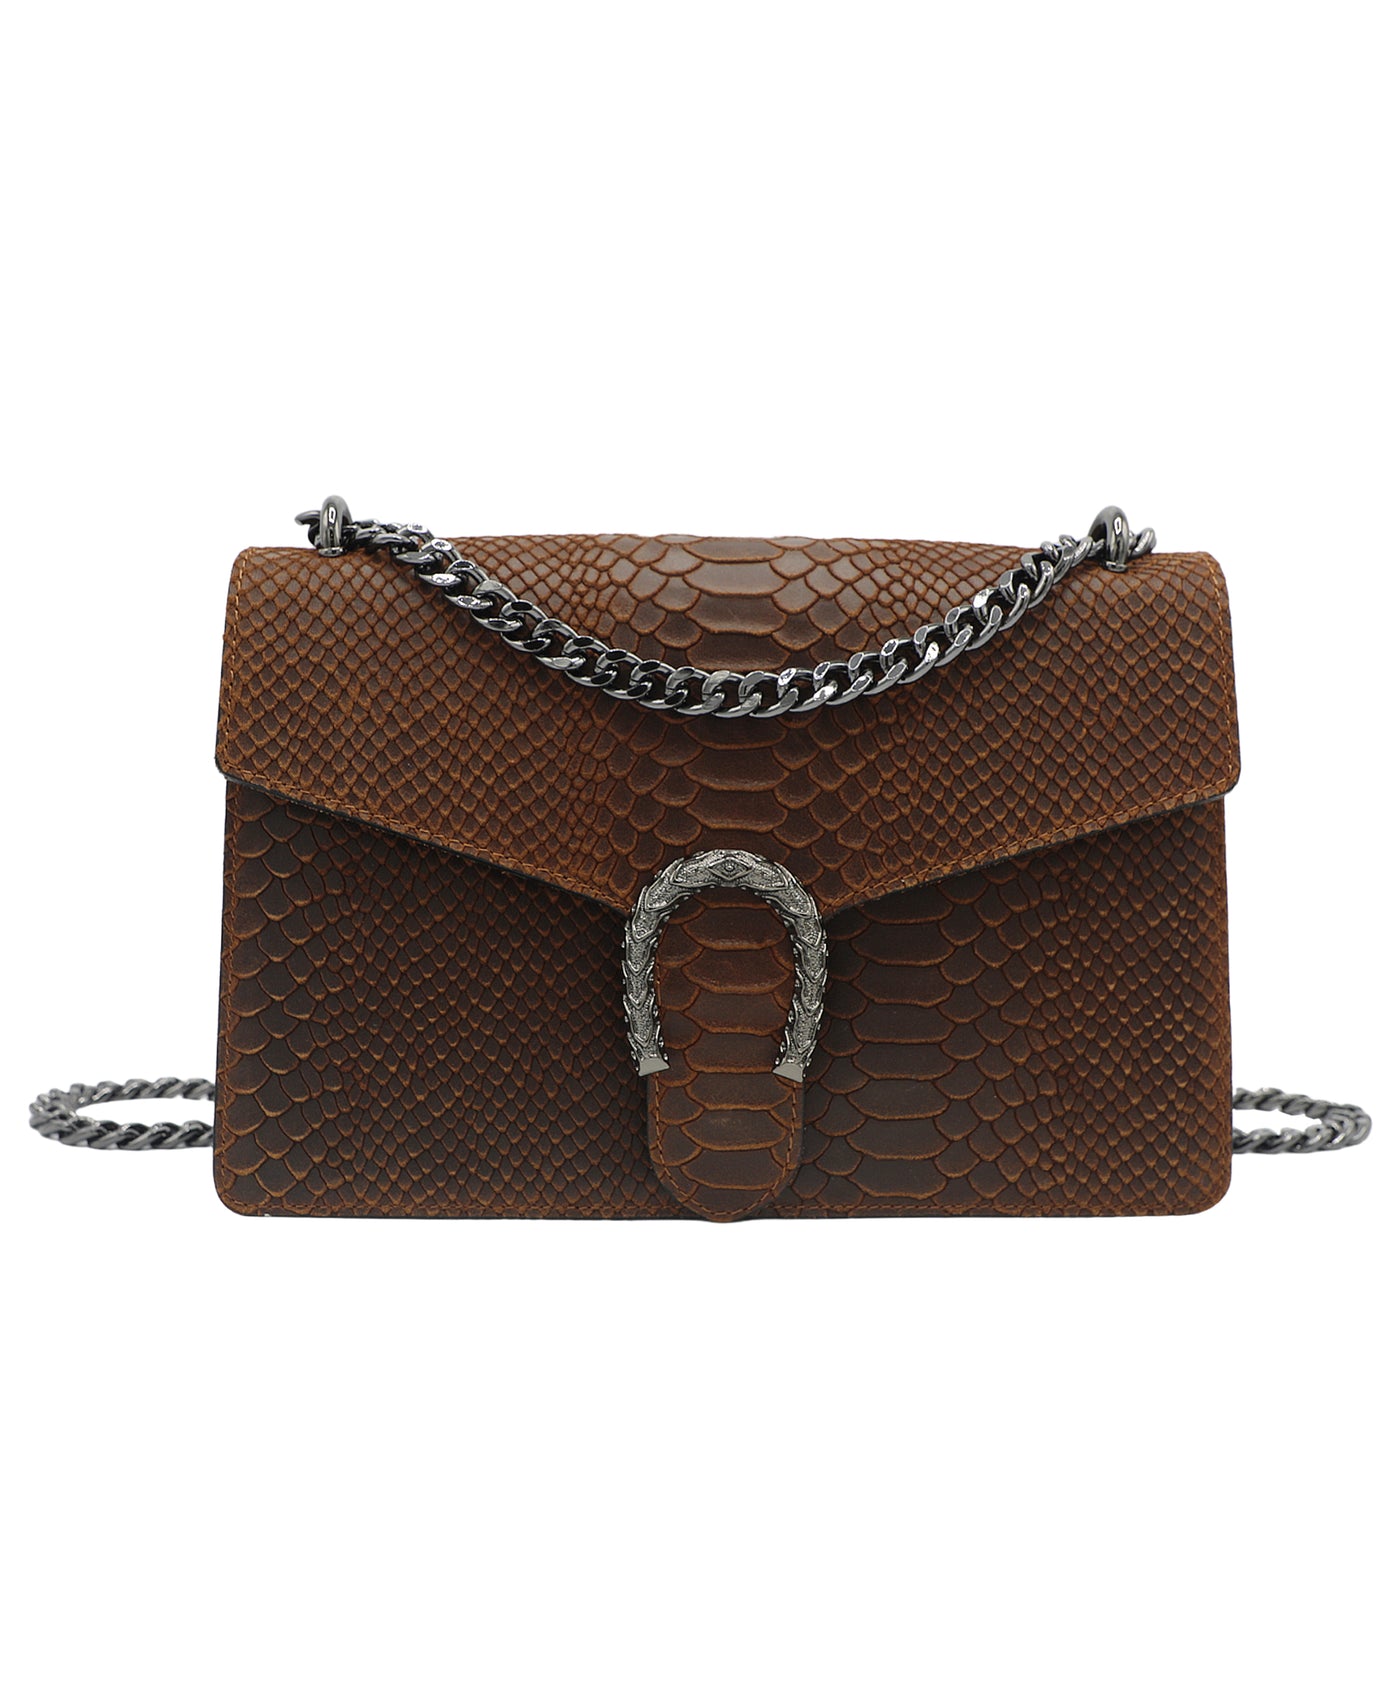 Embossed Leather Handbag w/ Chain Strap image 1